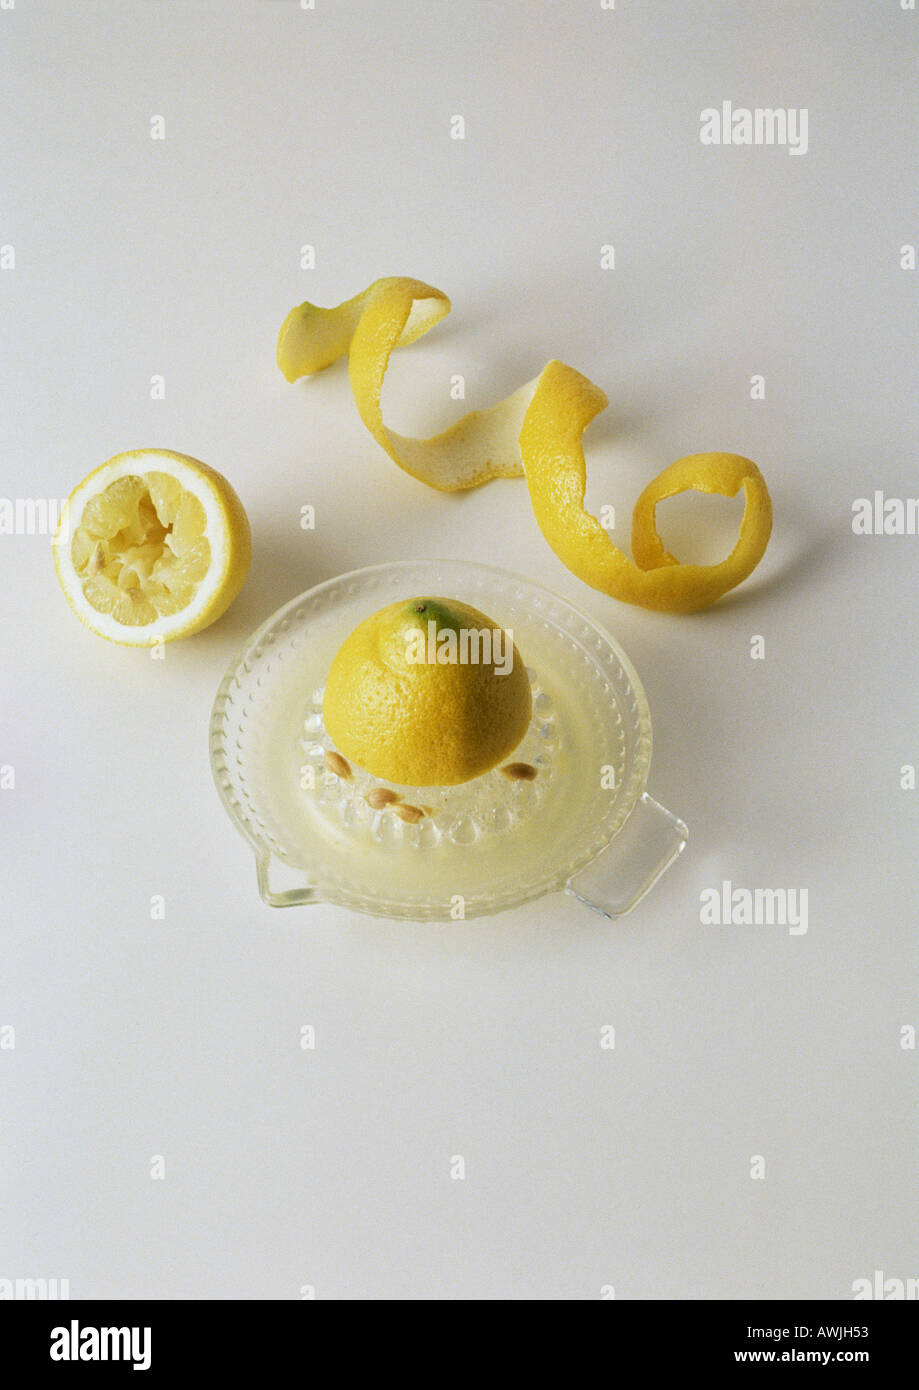 Lemon on lemon press and lemon peel Stock Photo